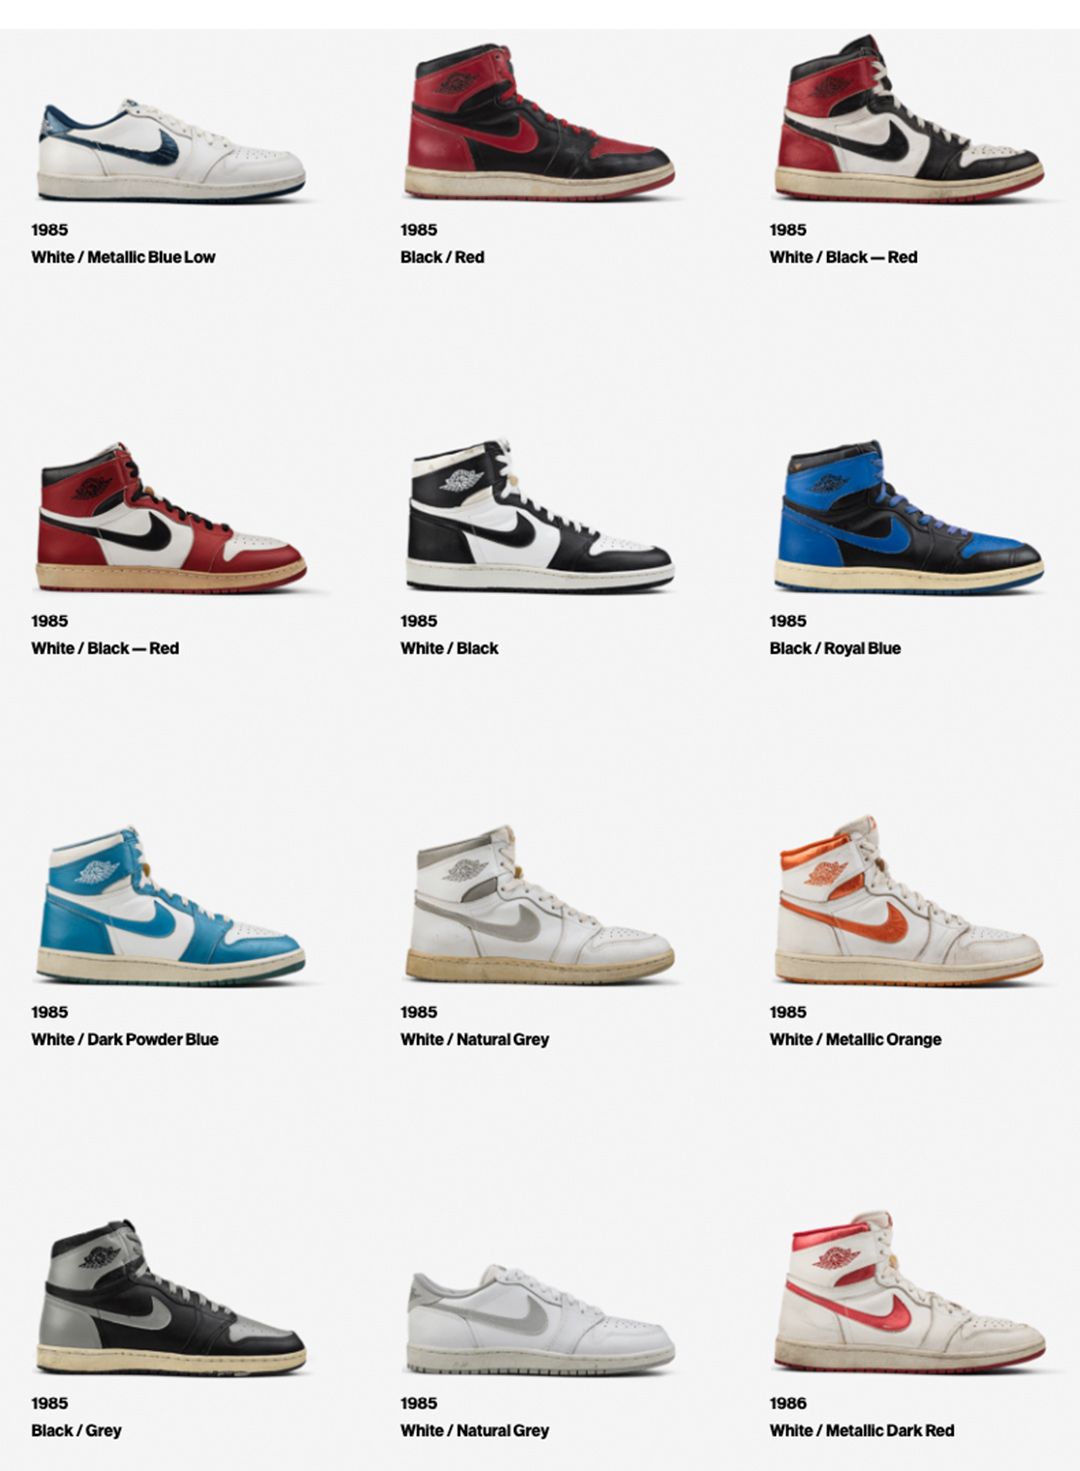 Nike business news: Jordan Brand just earned $4.7B